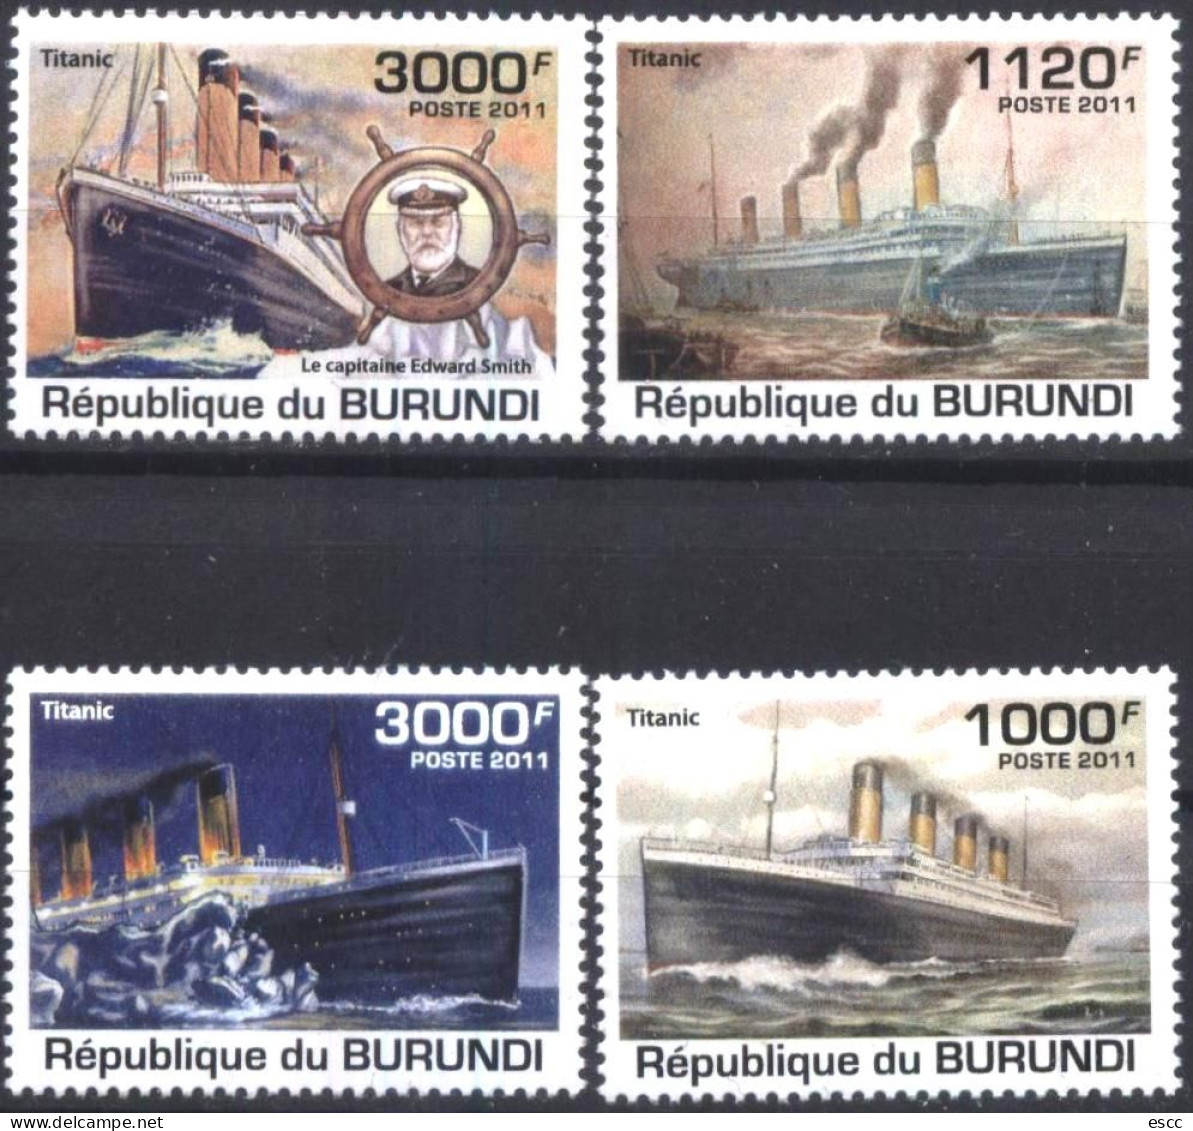 Mint Stamps Ships Titanic 2011 From Burundi - Schiffe